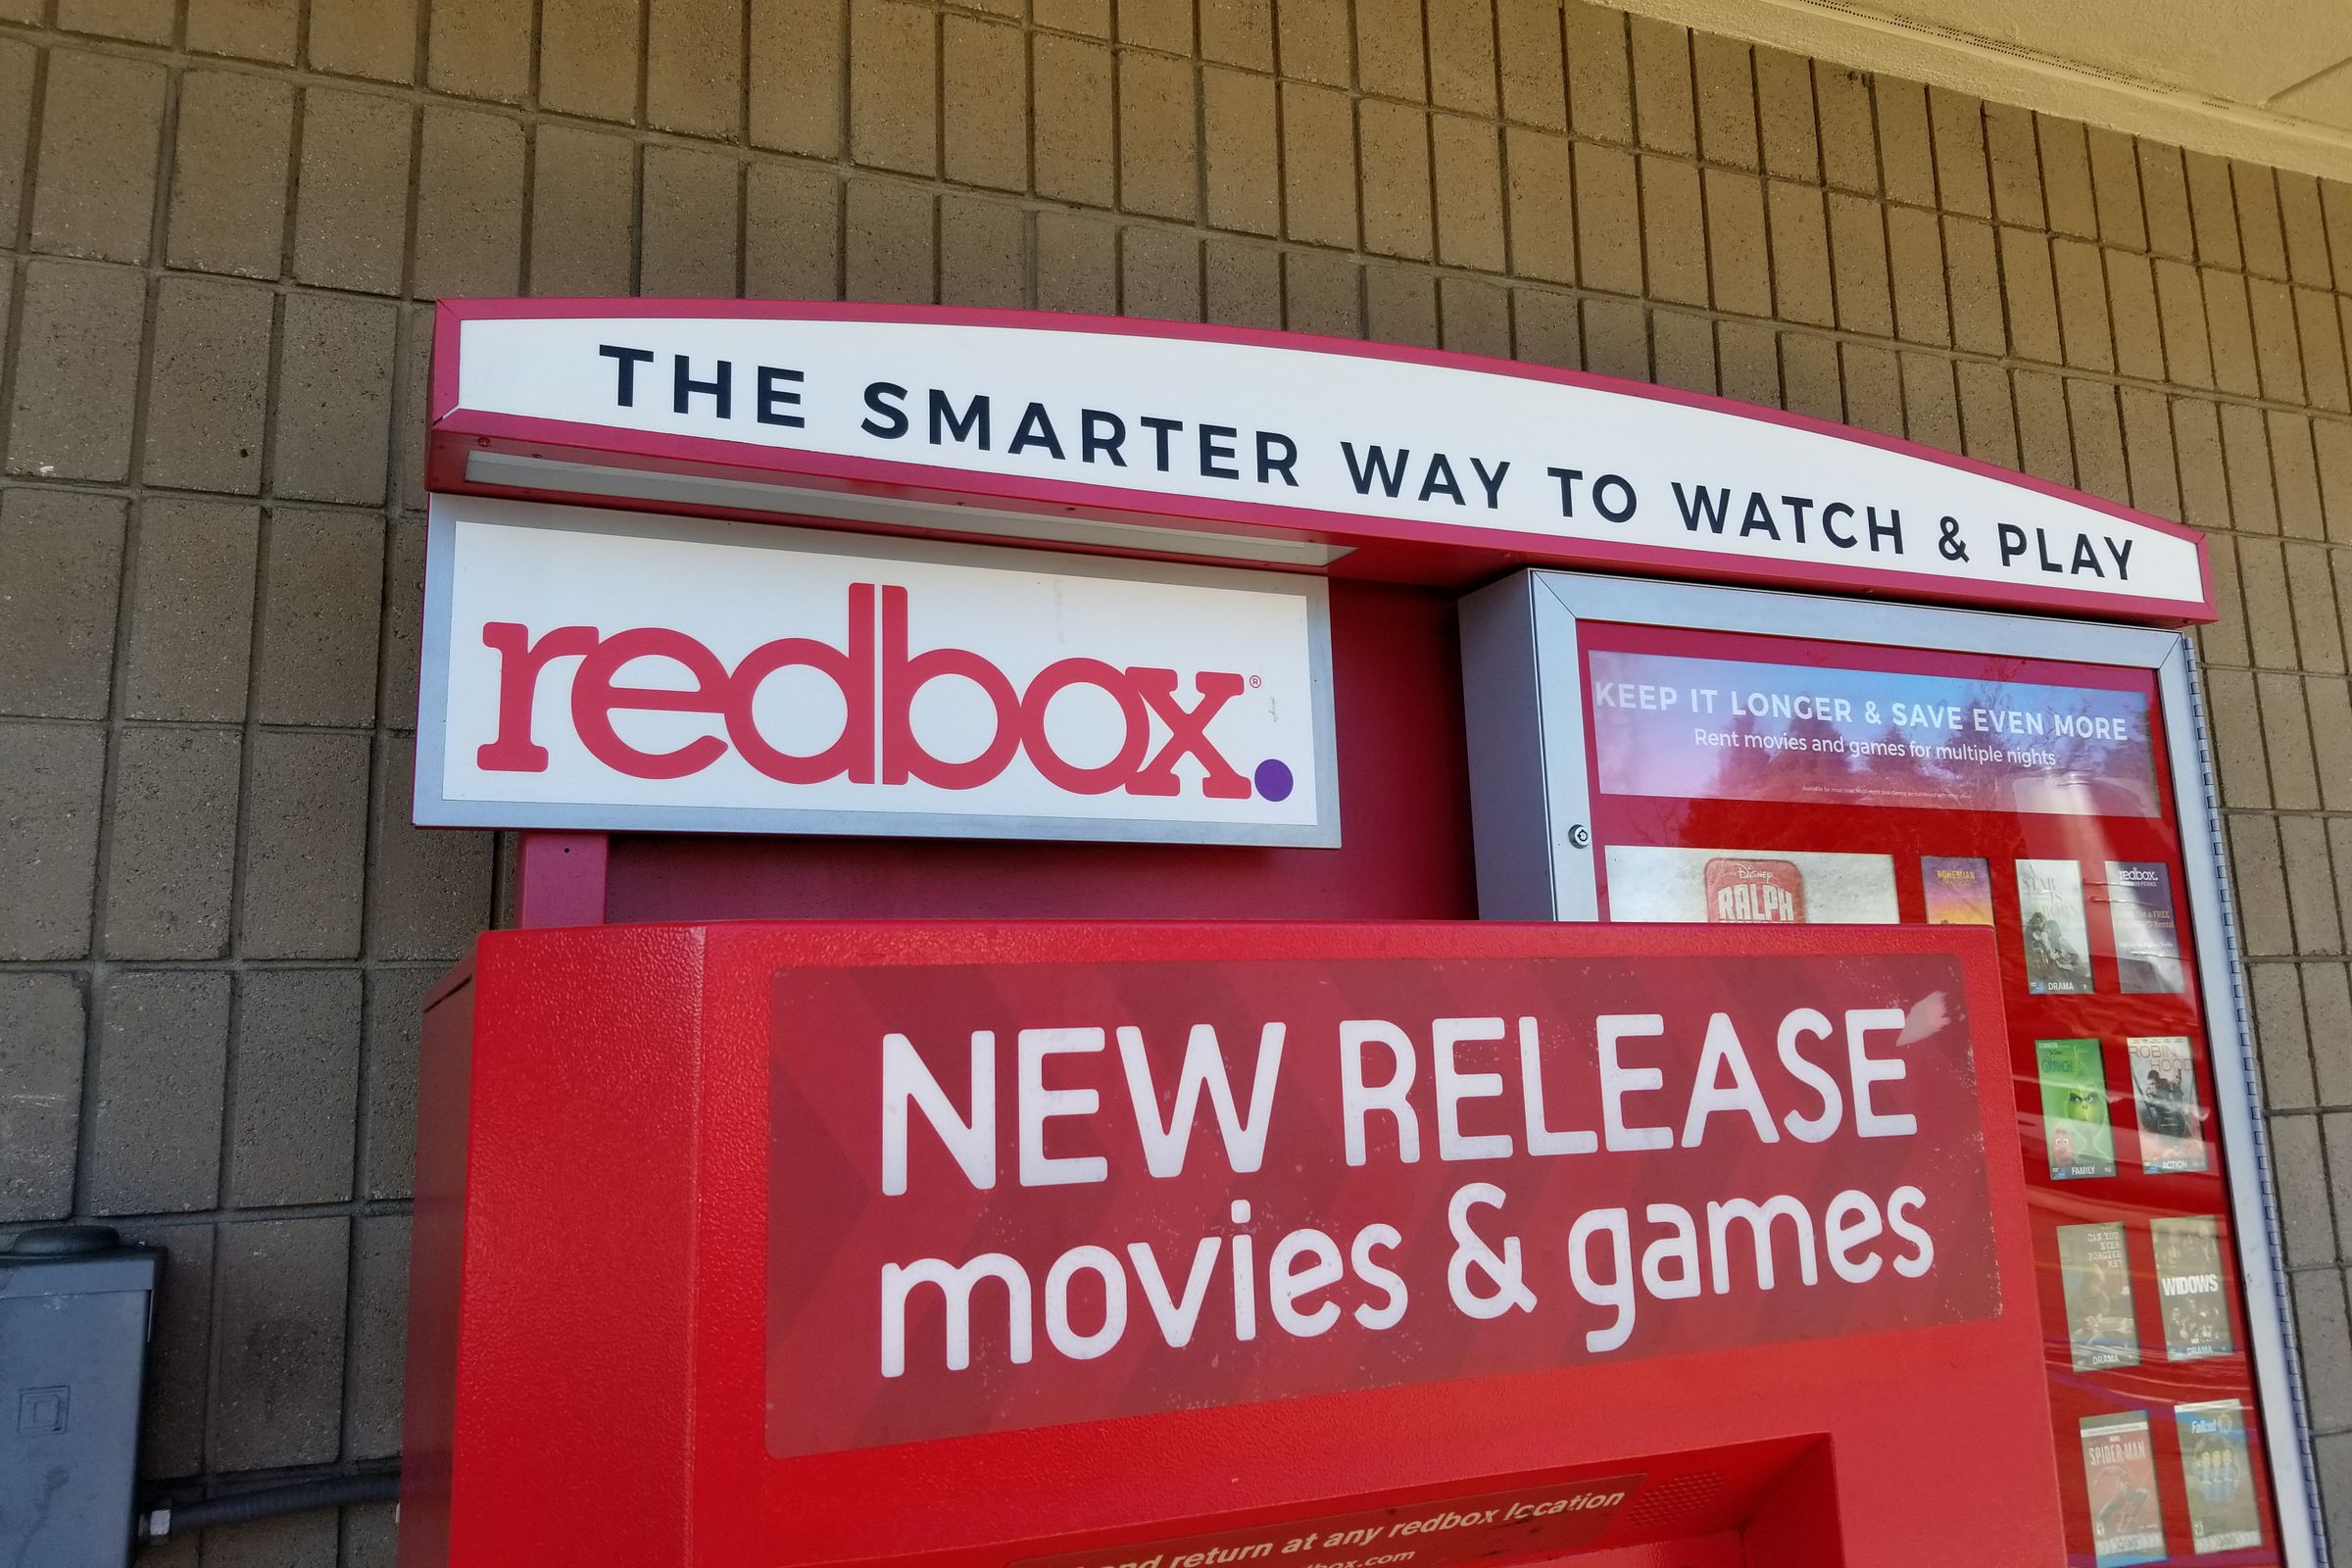 An image showing a Redbox kiosk